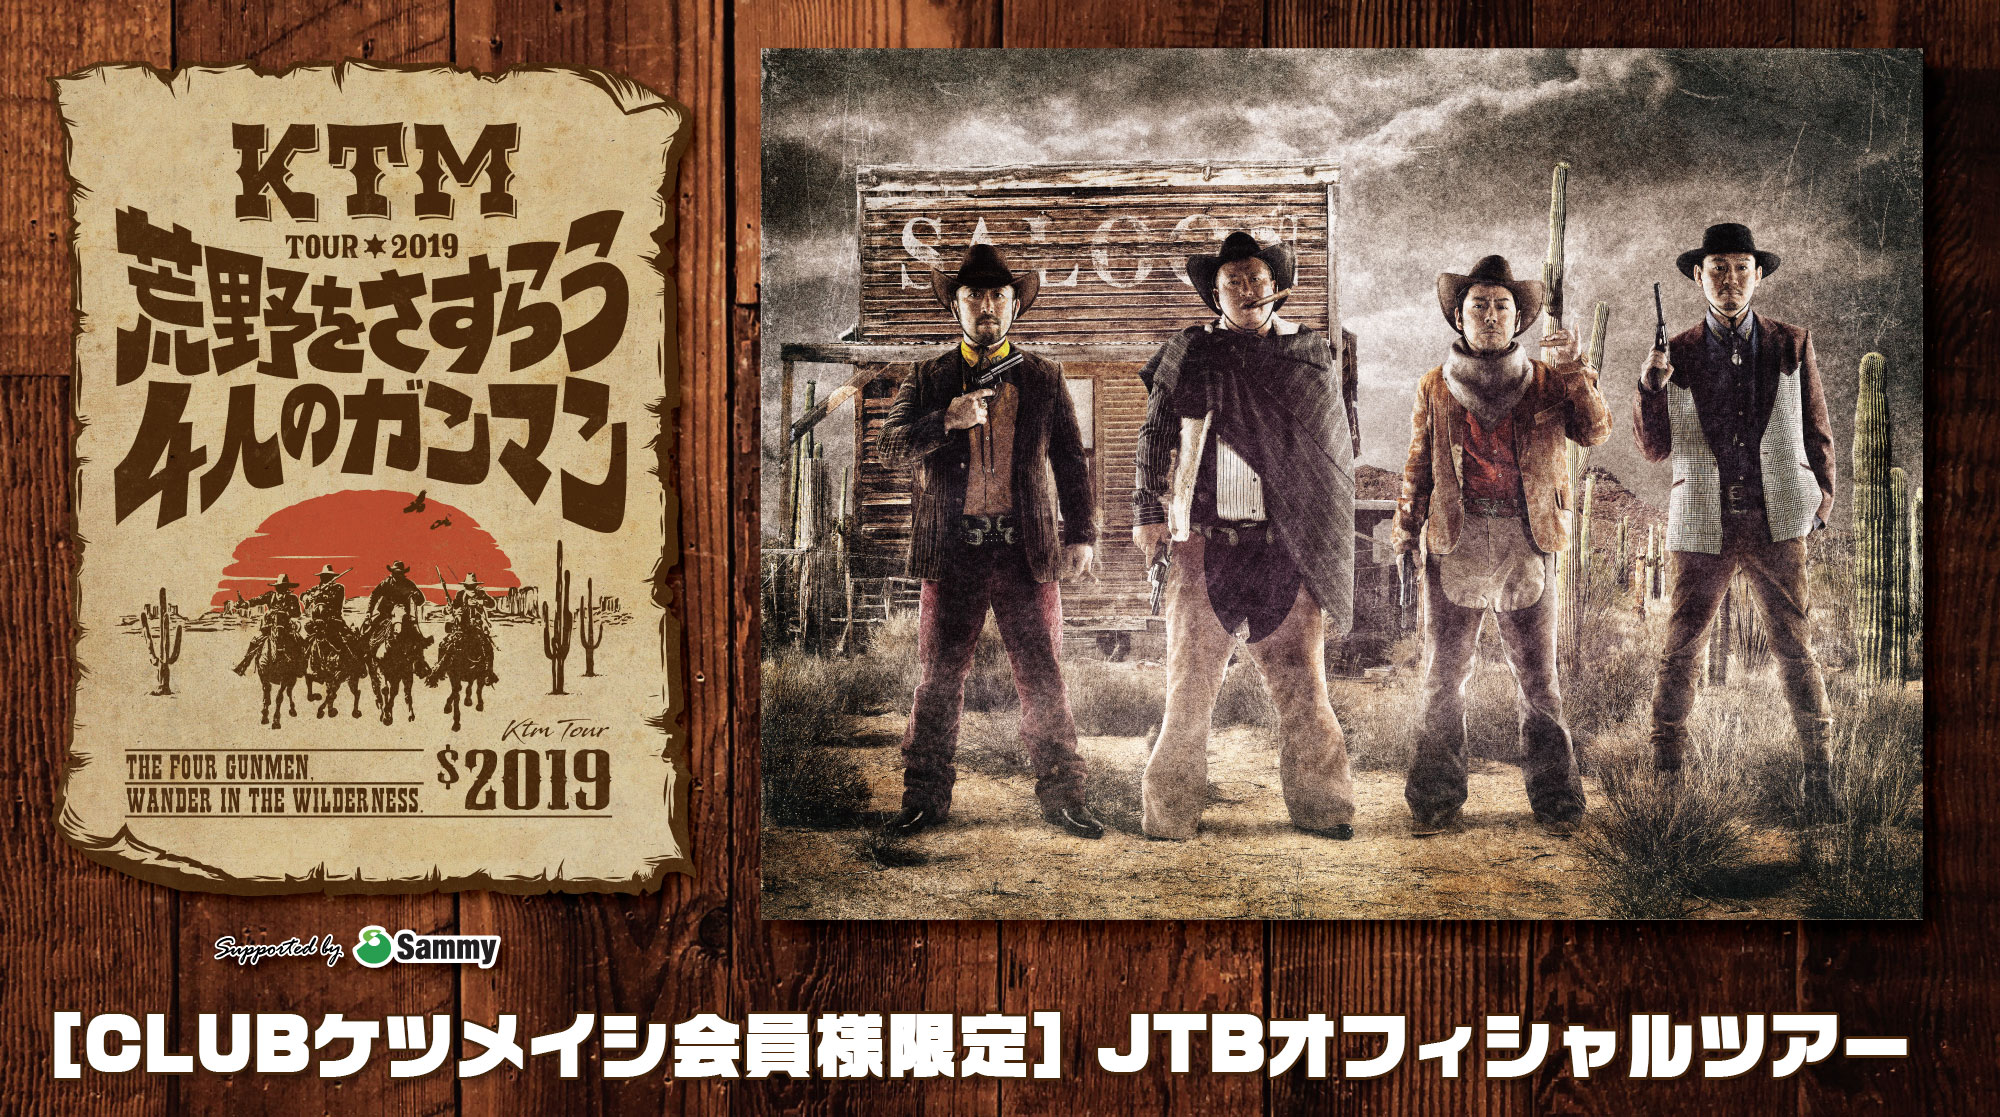 KTM TOUR 2019 荒野をさすらう4人のガンマン  チケット付き JTBオフィシャルツアー<